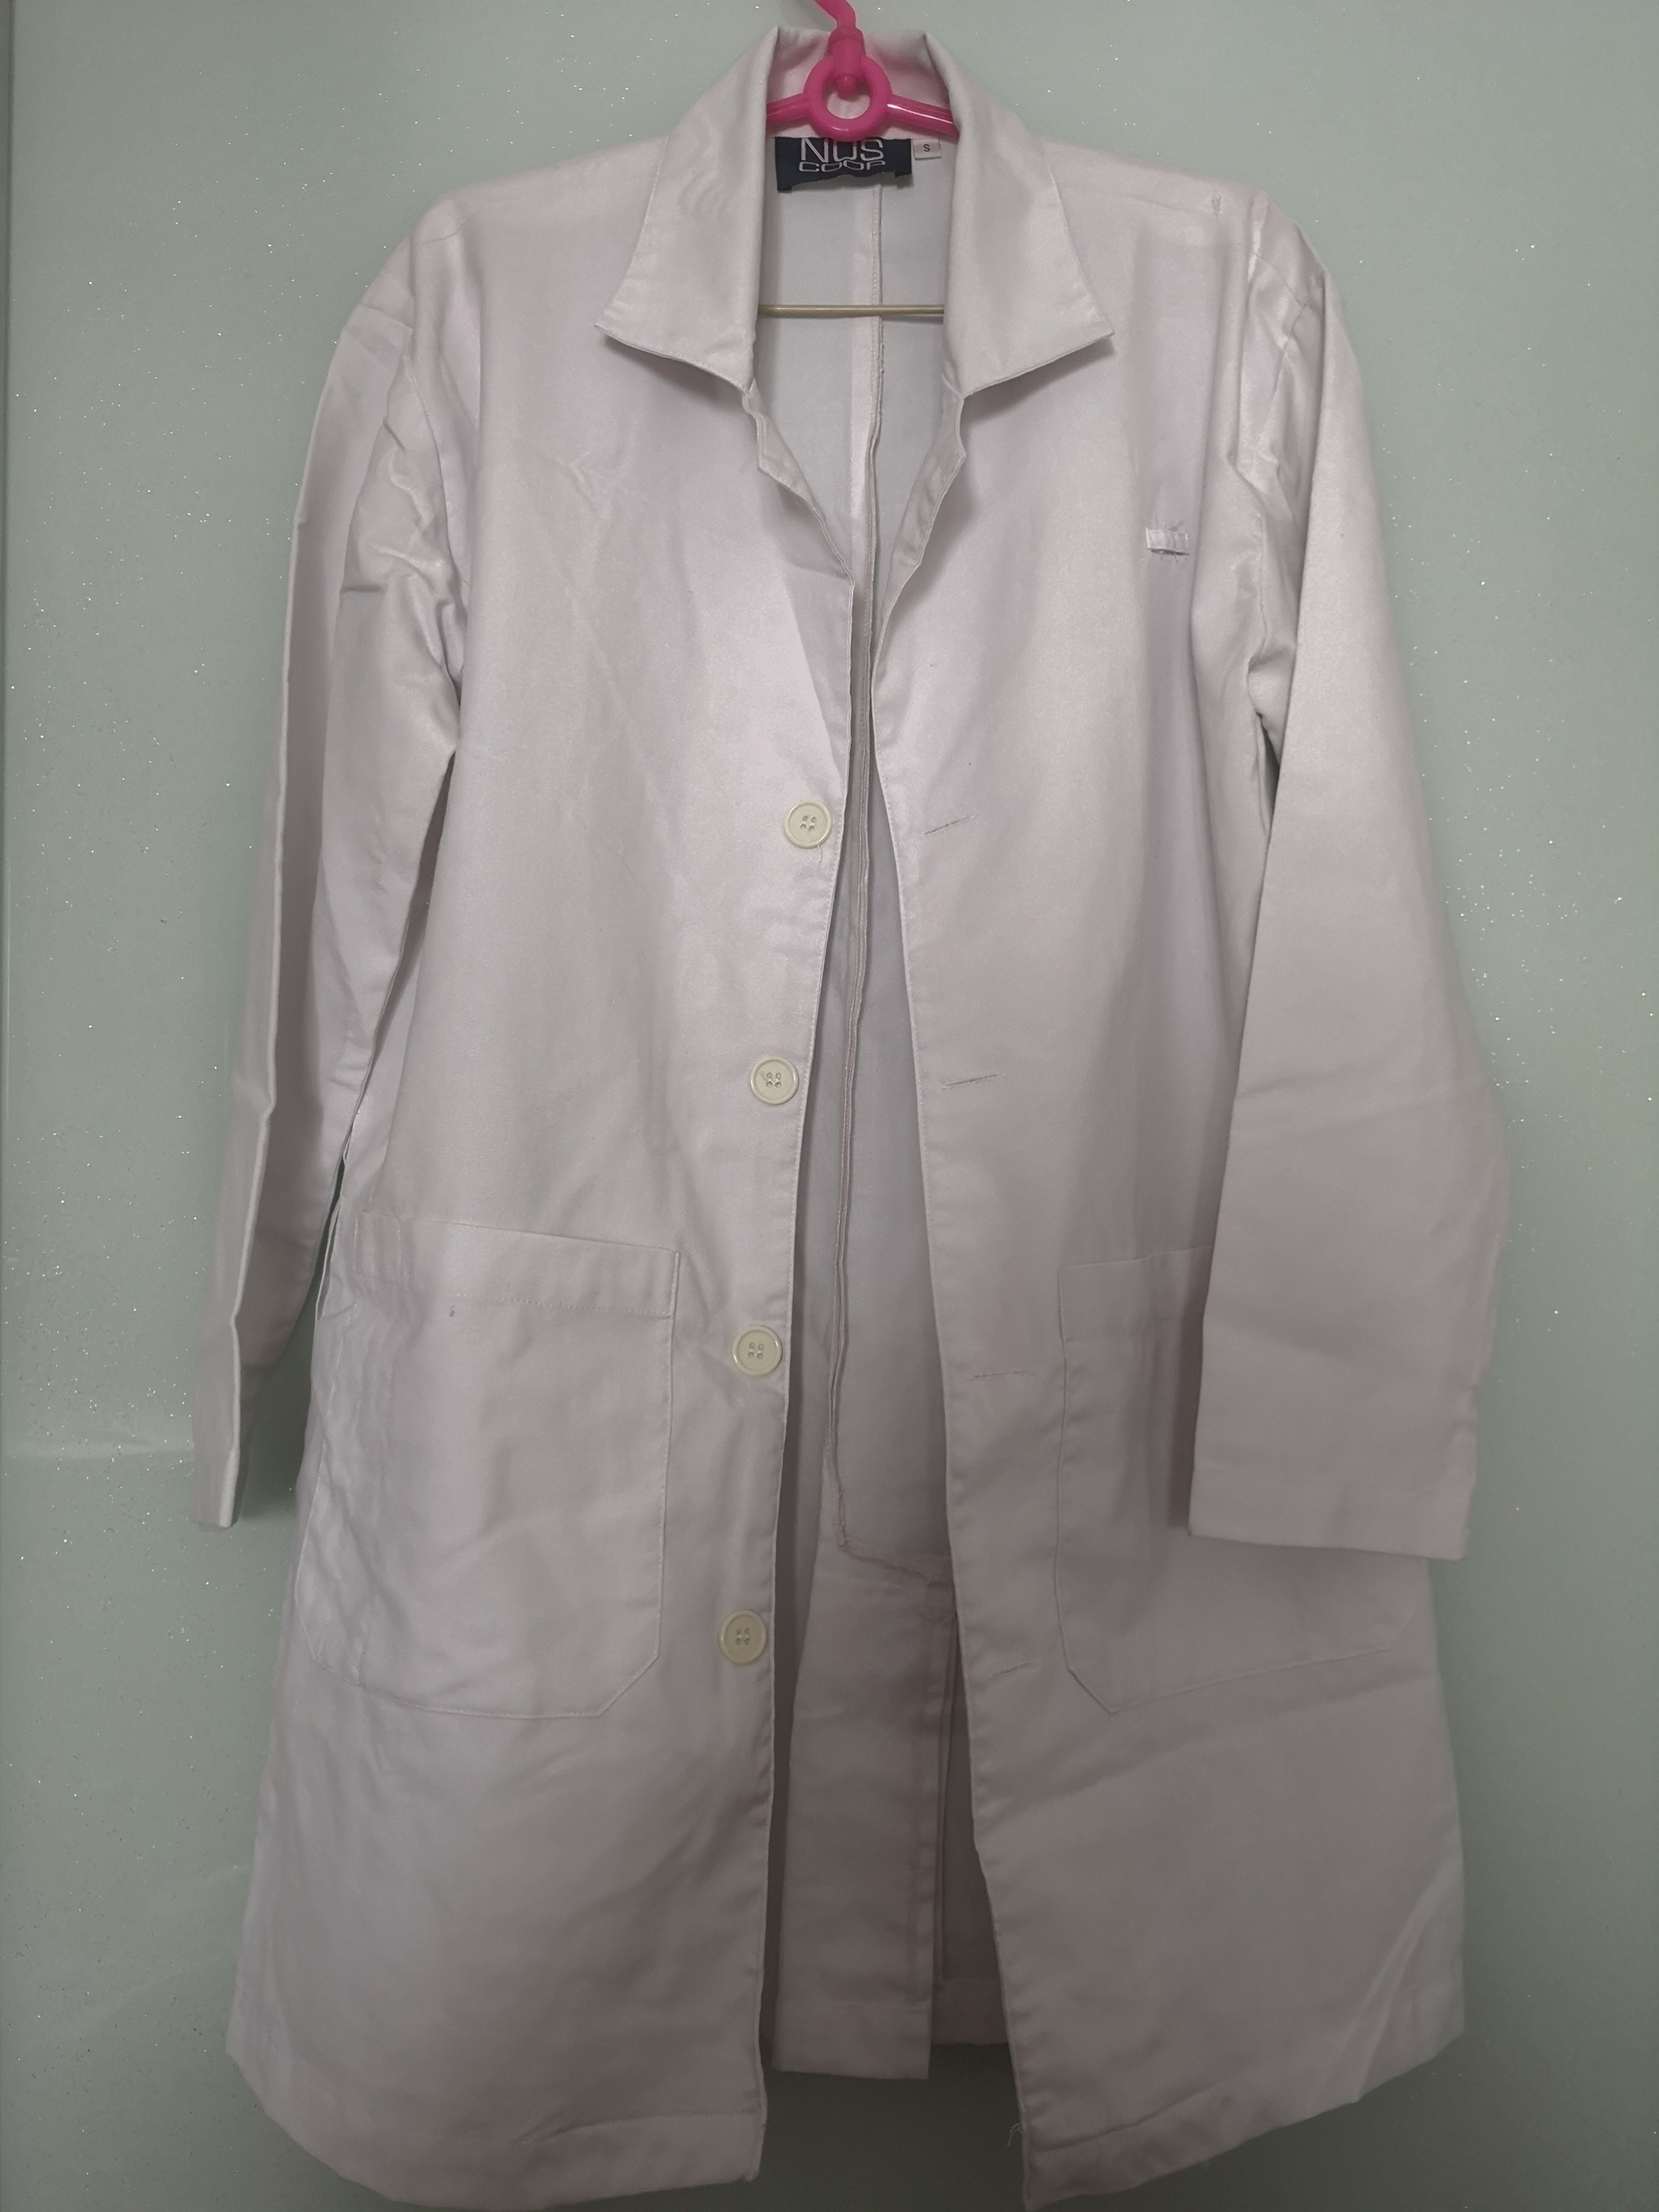 NUS COOP Long Sleeve White Lab Coat, Everything Else on Carousell